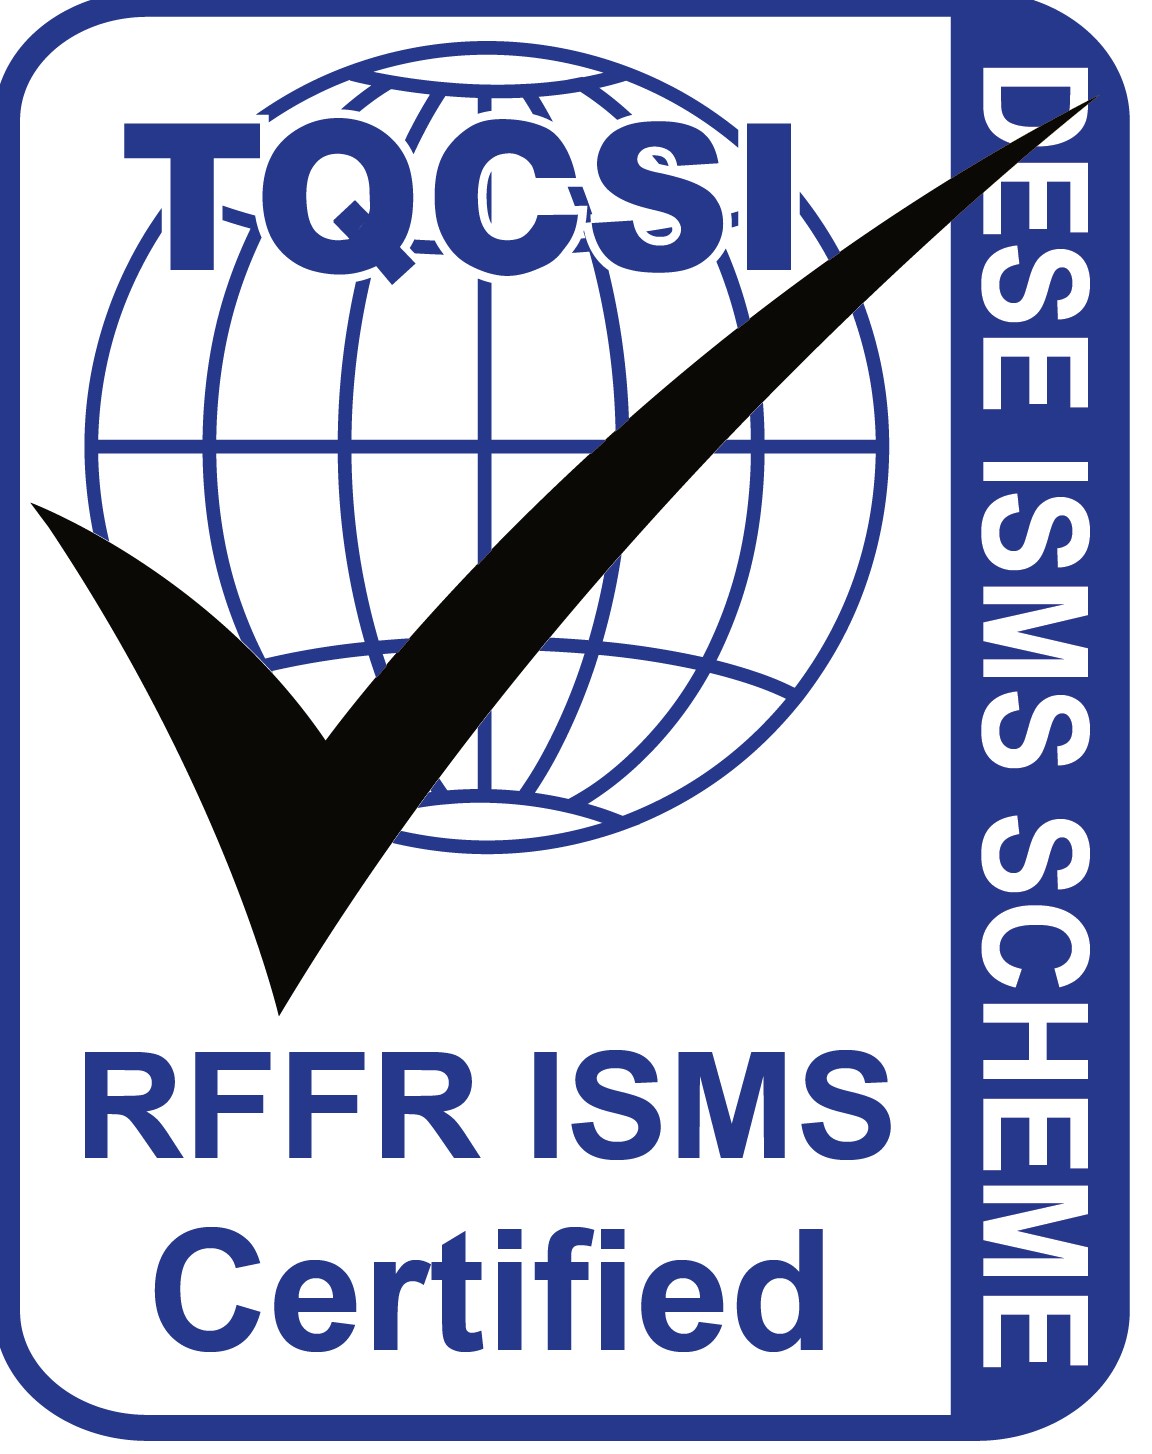 RFFR ISMS Information Security Management System cert mark